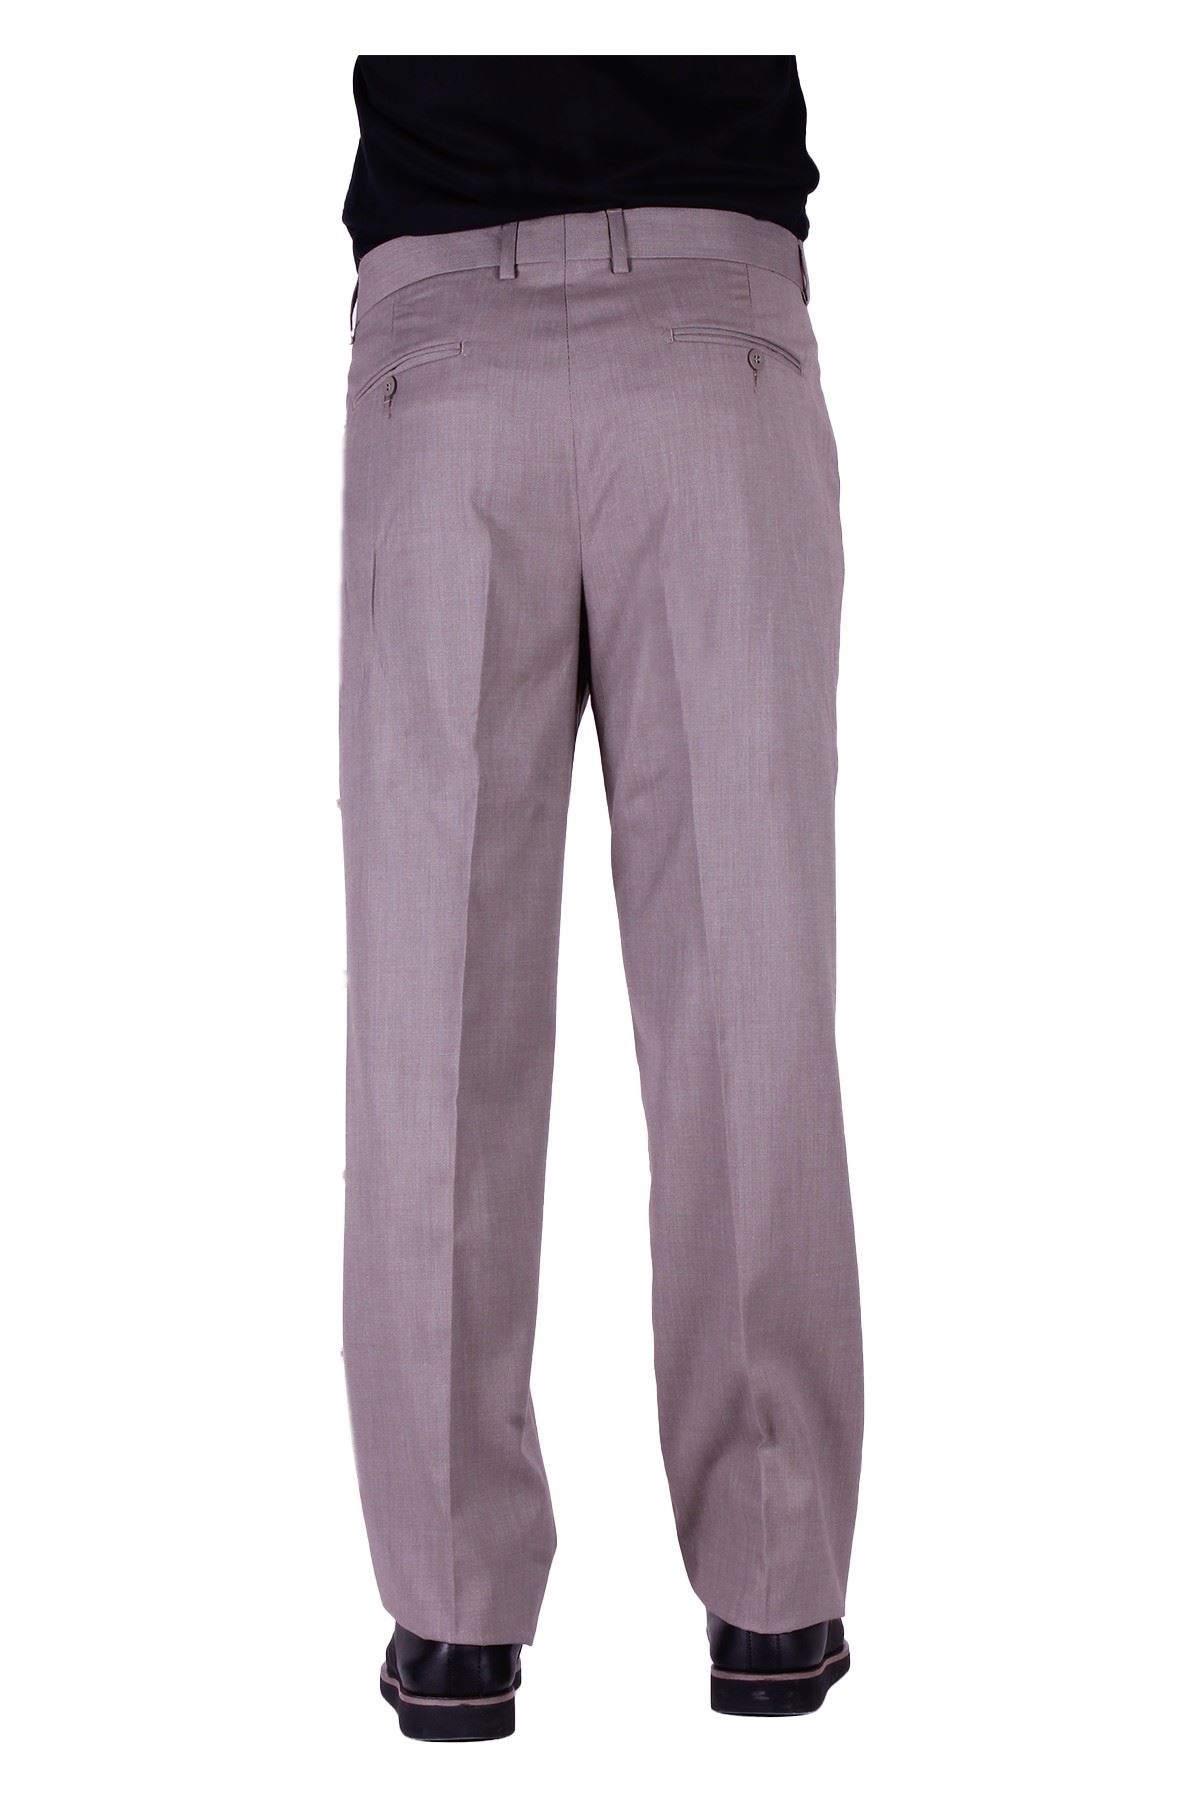 Giyinsen Erkek Kahverengi Kanvas Pantolon - 23KA50000010